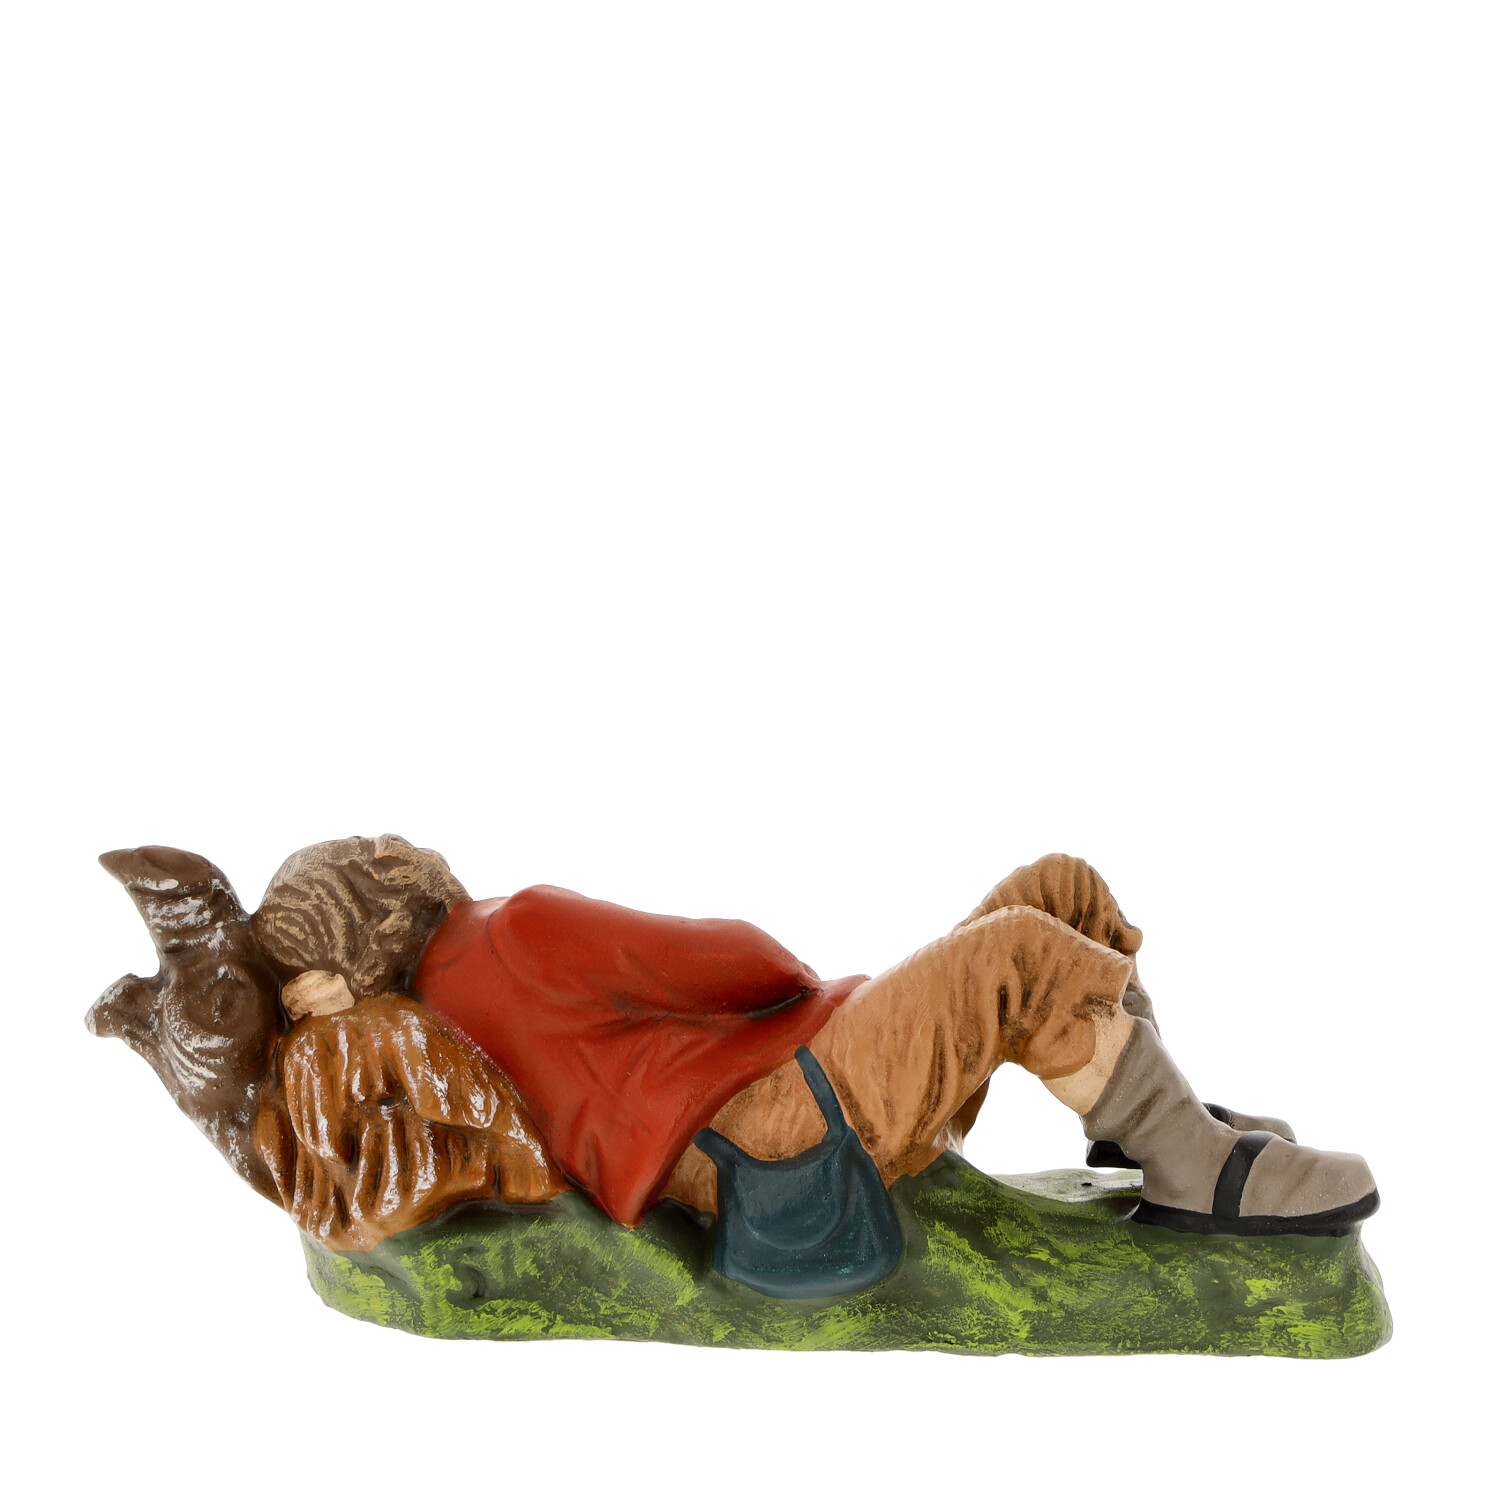 Sleeping shepherd - MAROLIN Nativity figure - made in Germany